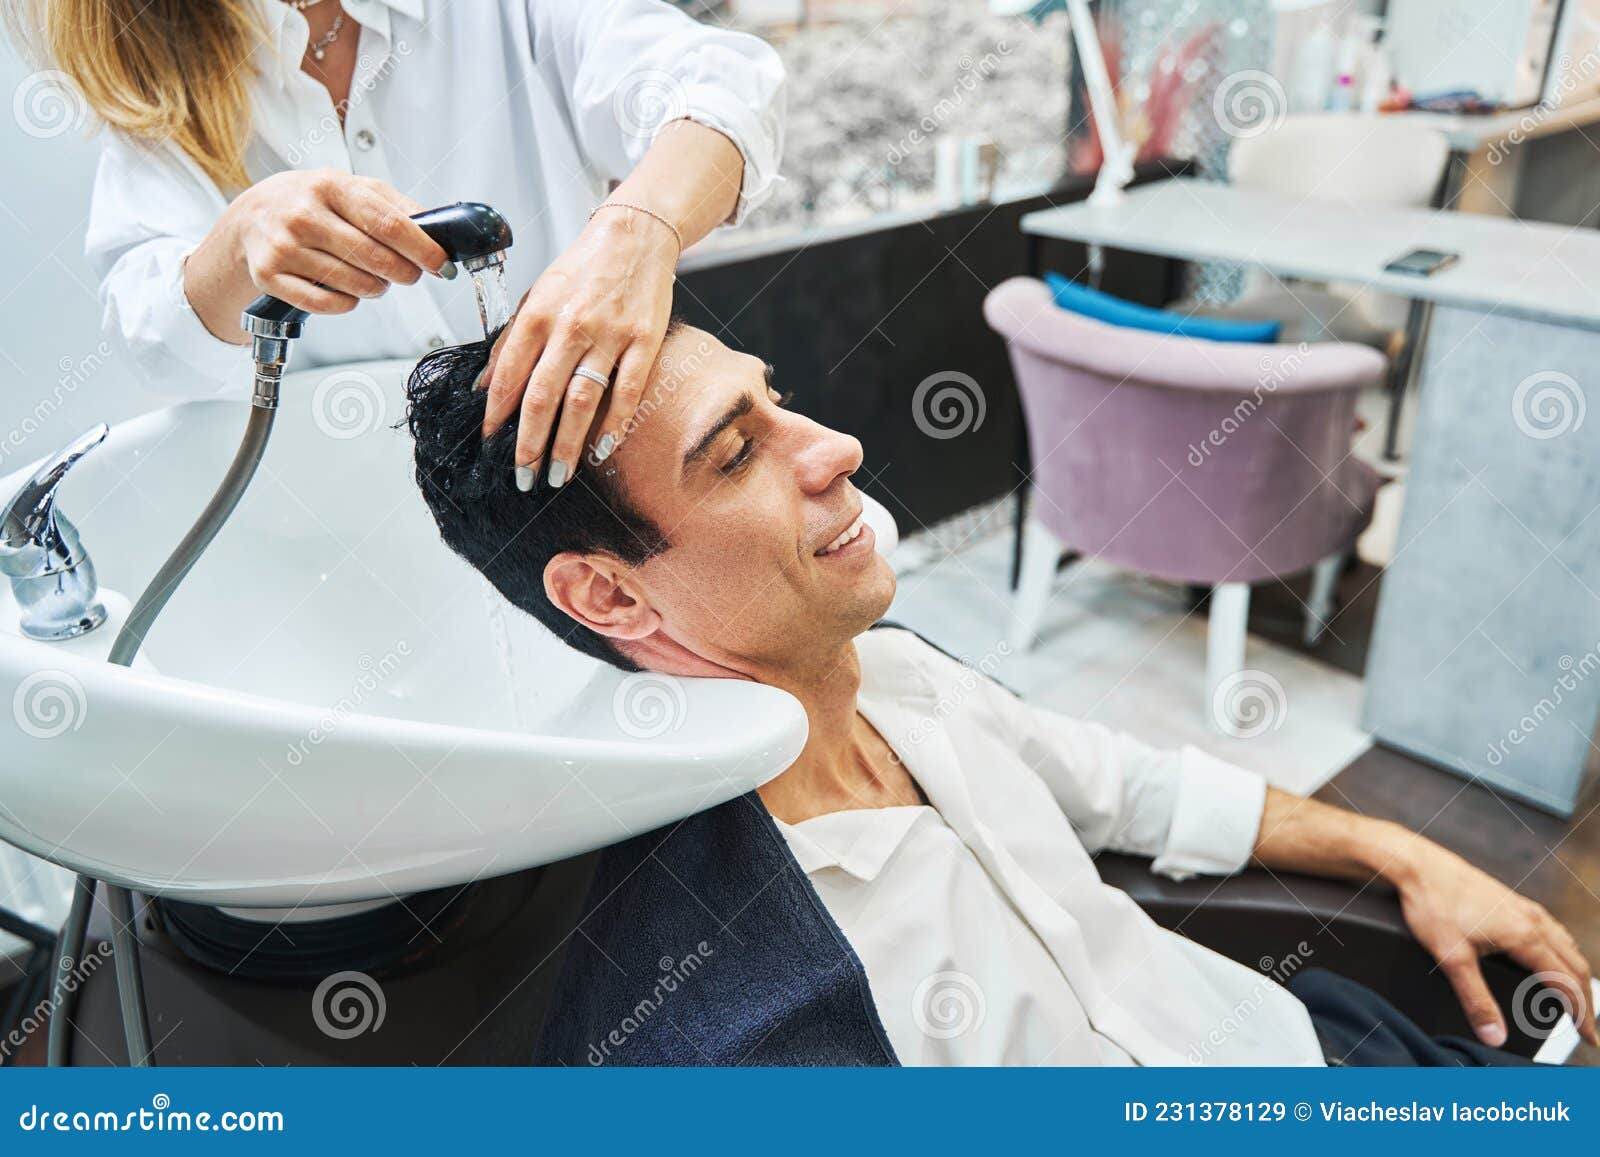 Client Enjoying Hair Washing in Beauty Salon Sink Stock Image - Image of  barbershop, lifestyle: 231378129